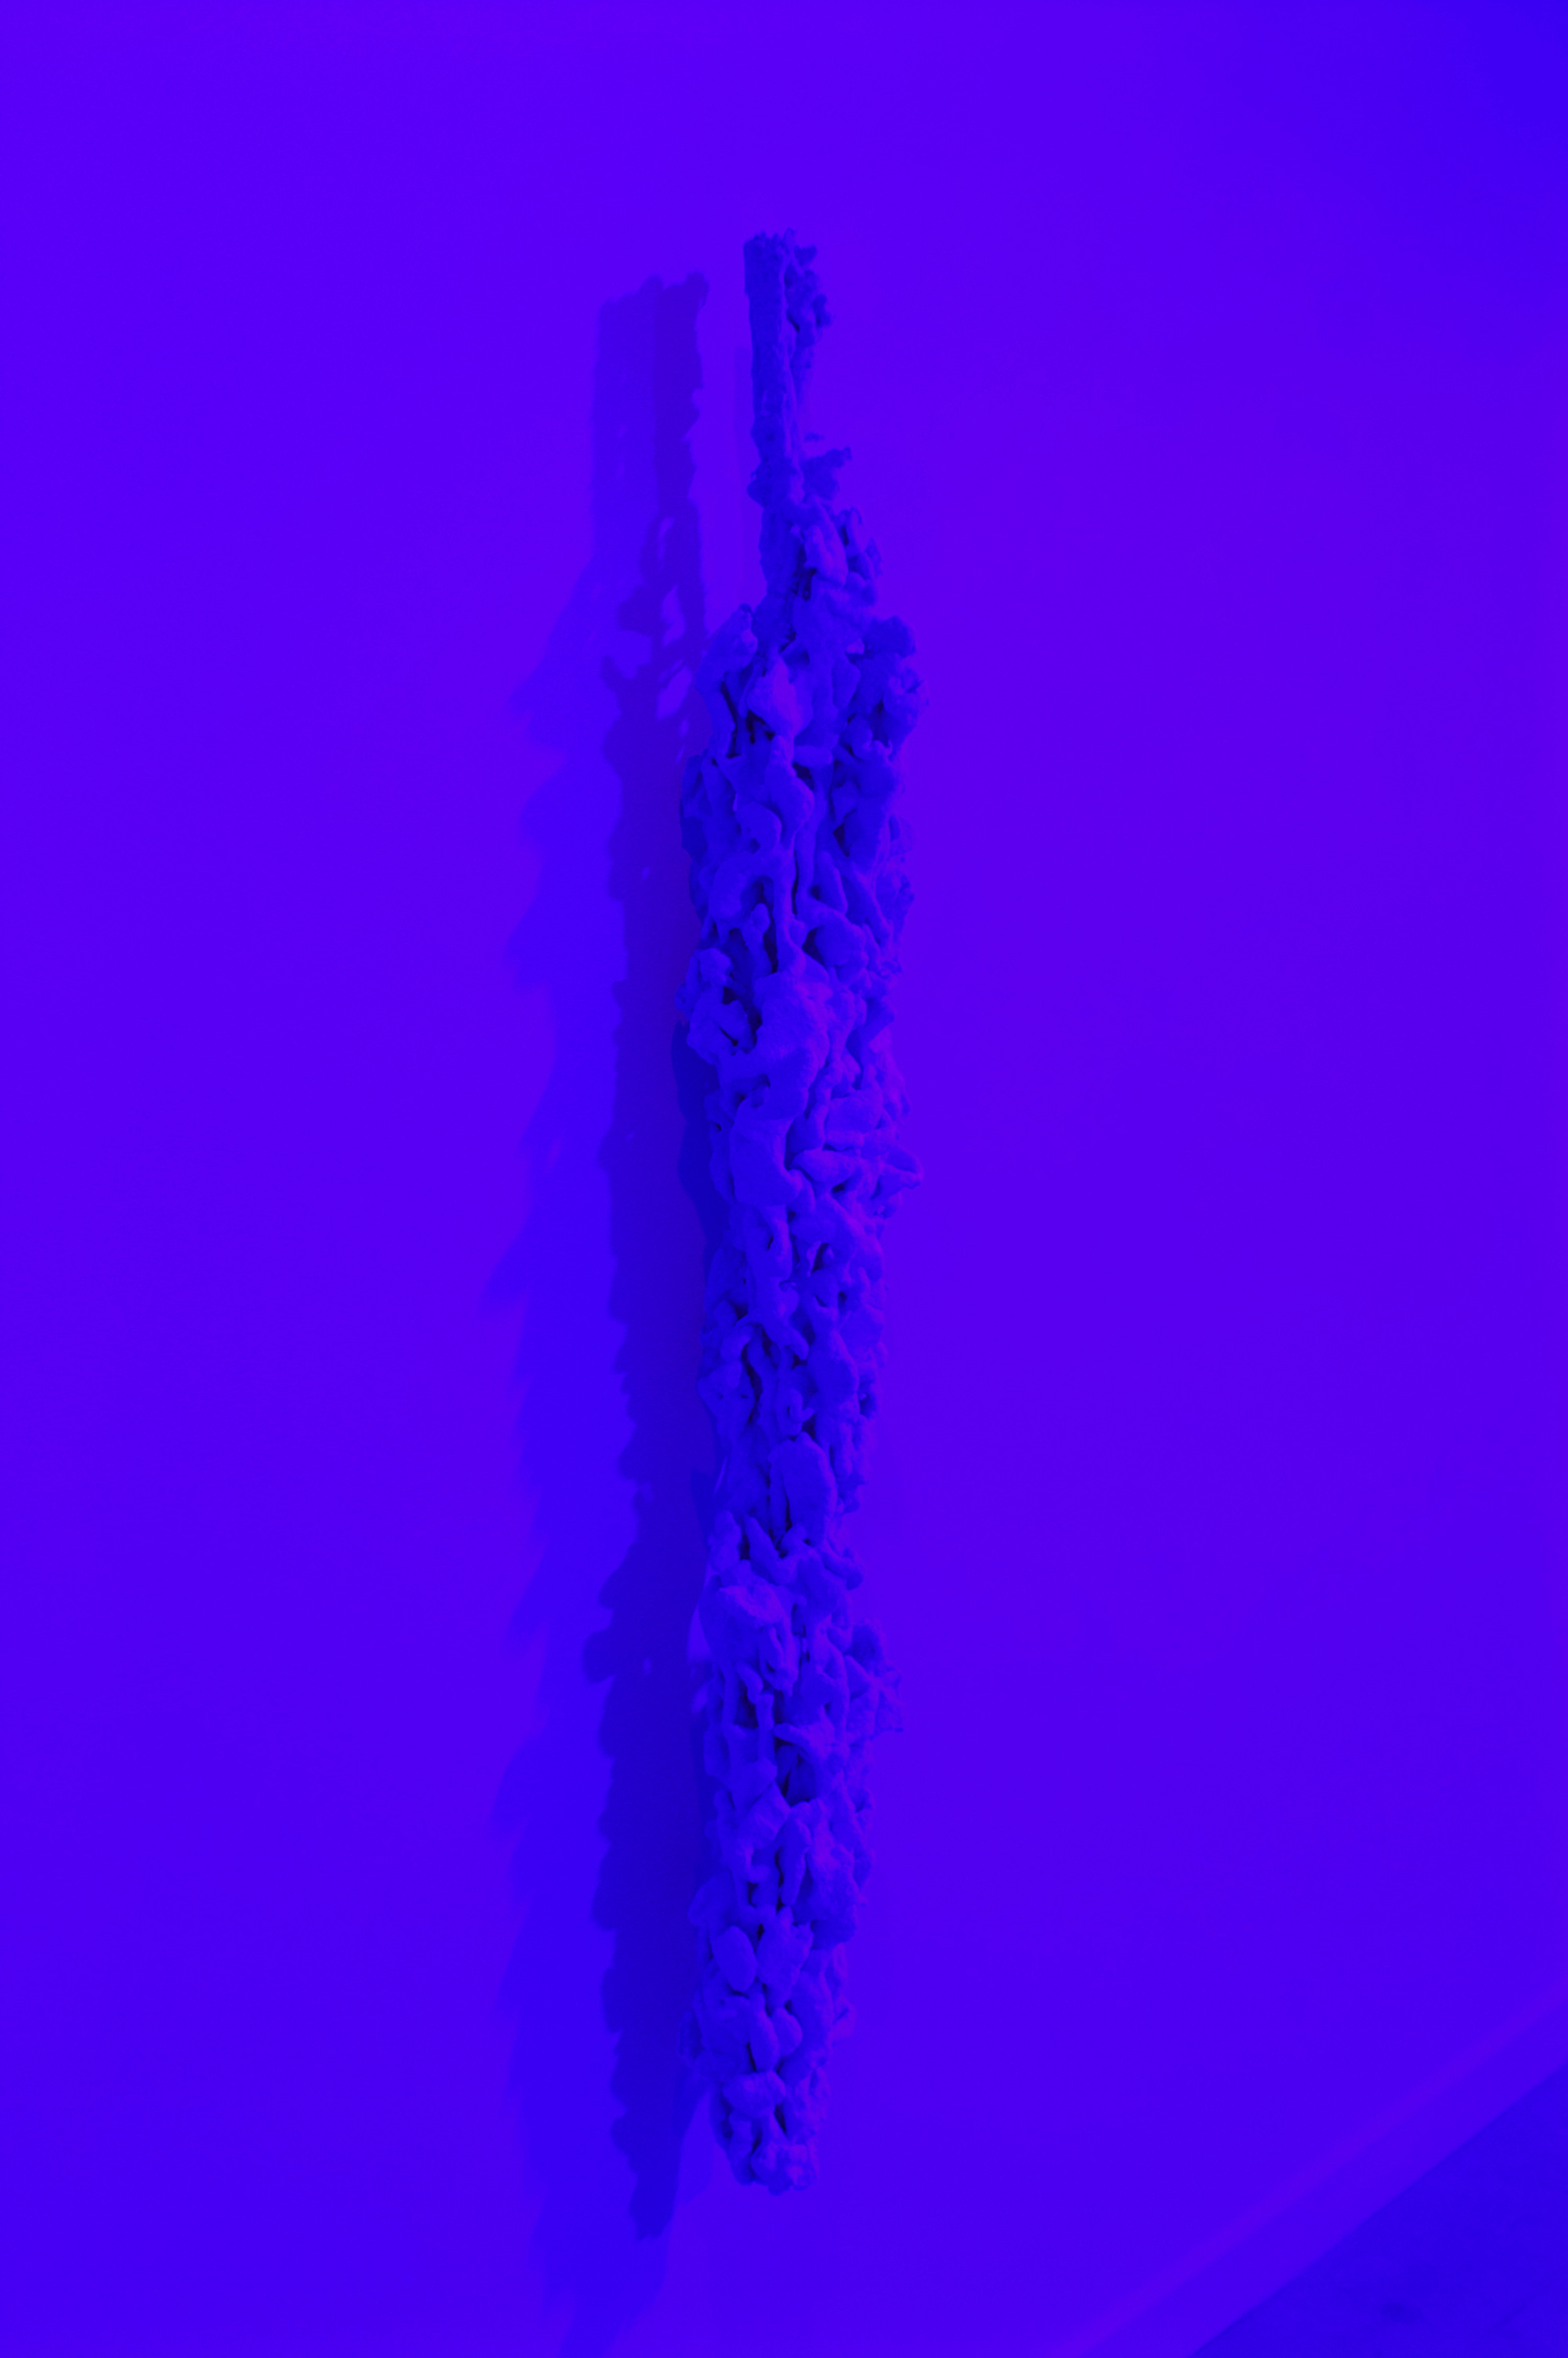   SOFIA LONDONO   Untitled , 2015, camo netting, hydrocal, silica sand, colbalt glass, 54" x 6" x 8" 